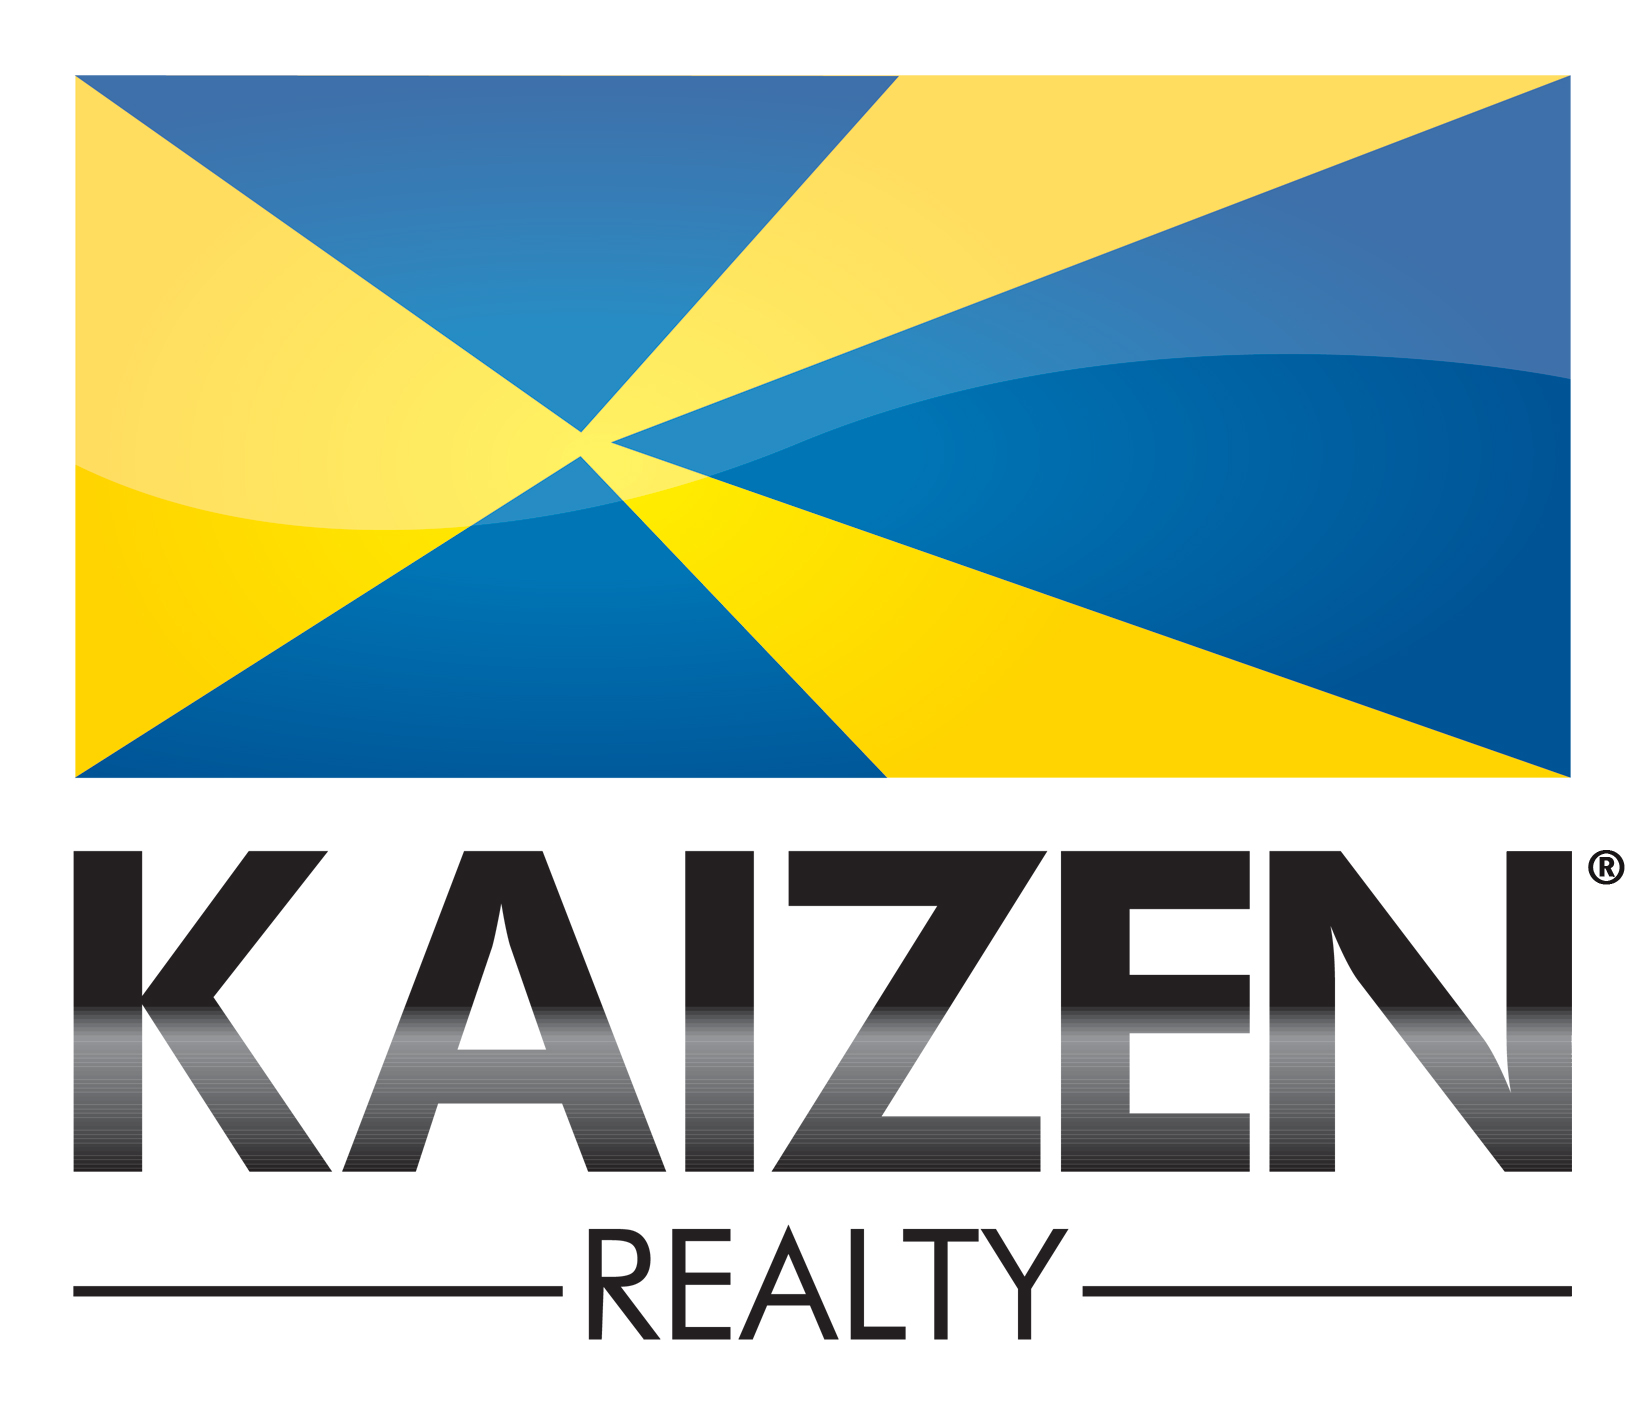 Karim Valiani - KAIZEN Realty Logo